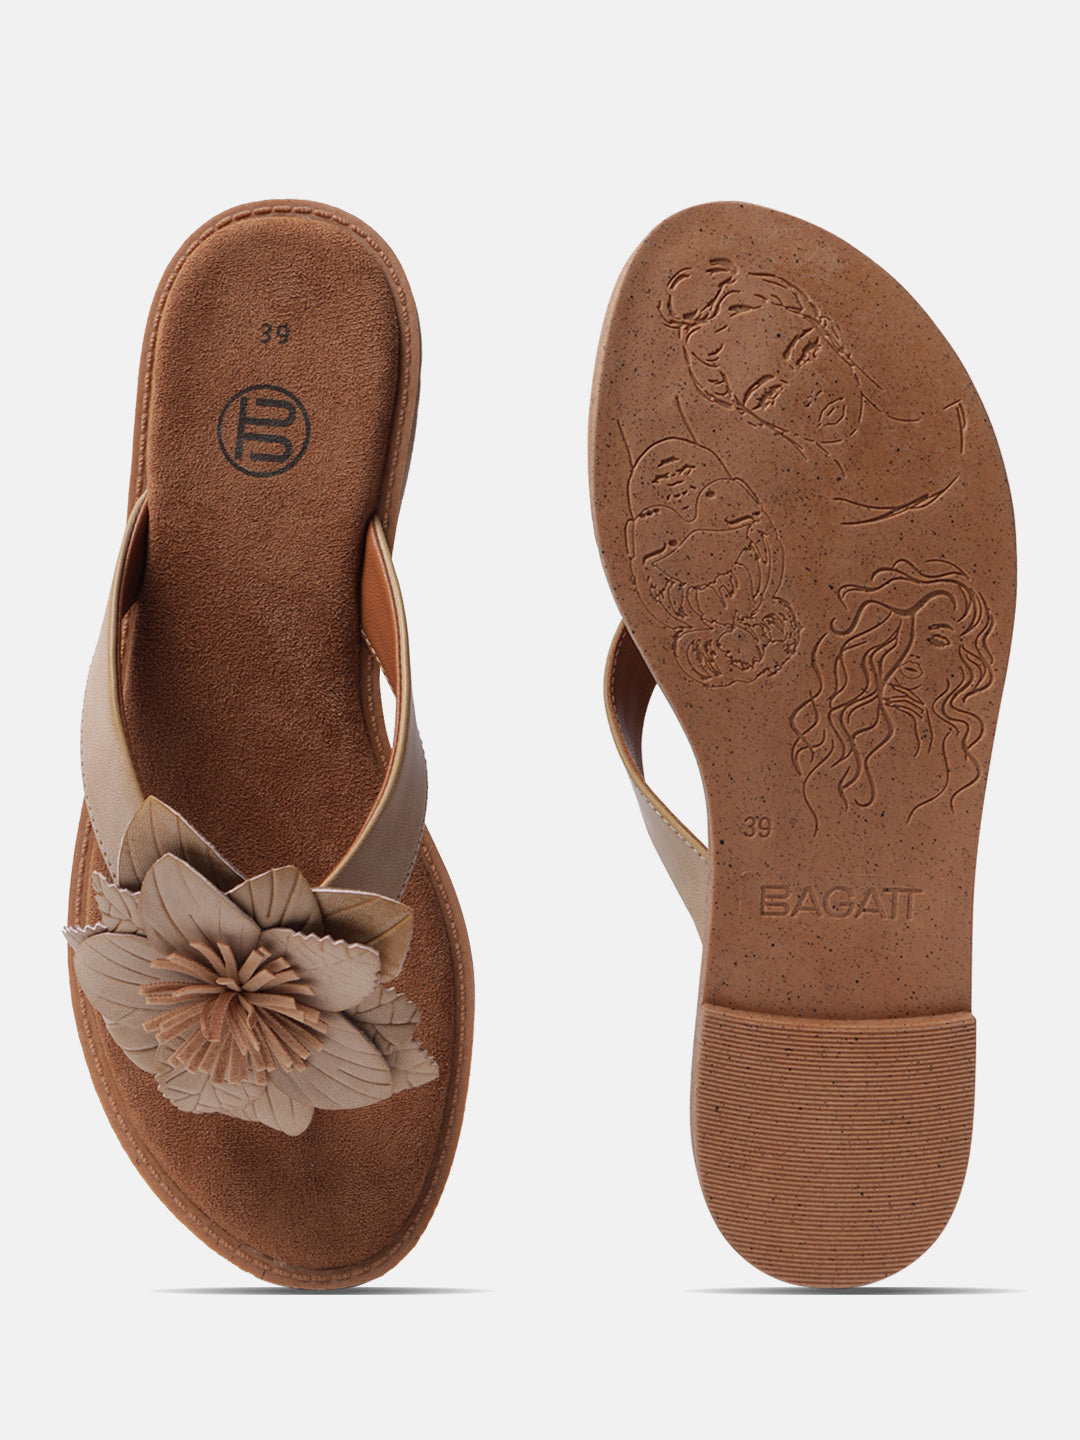 Goldy Beige Thongs Sandals